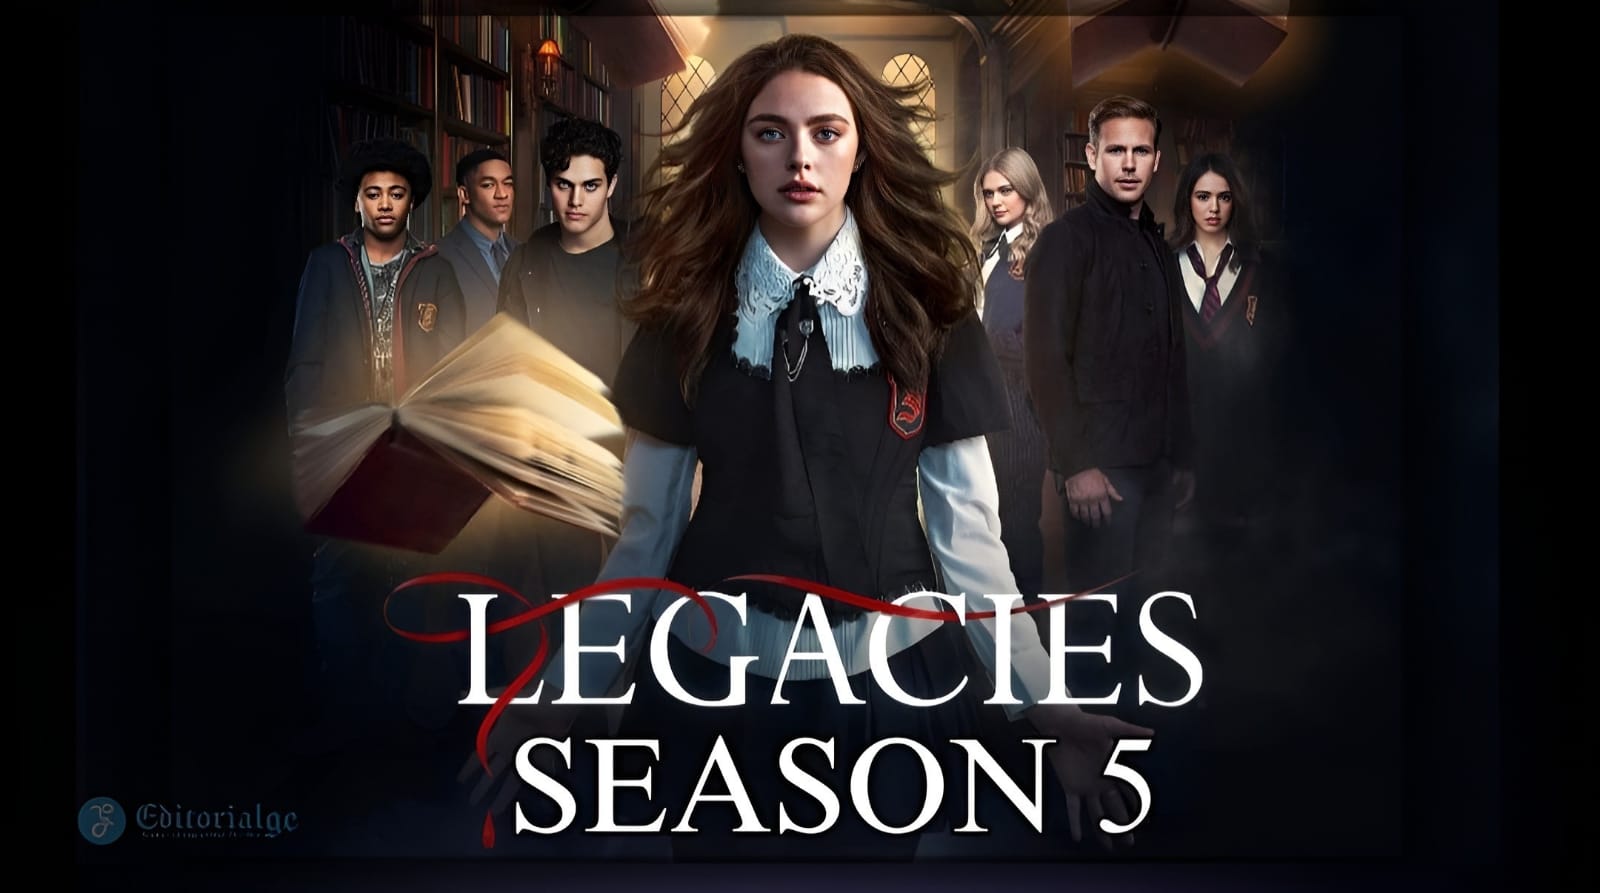 Legacies season 5